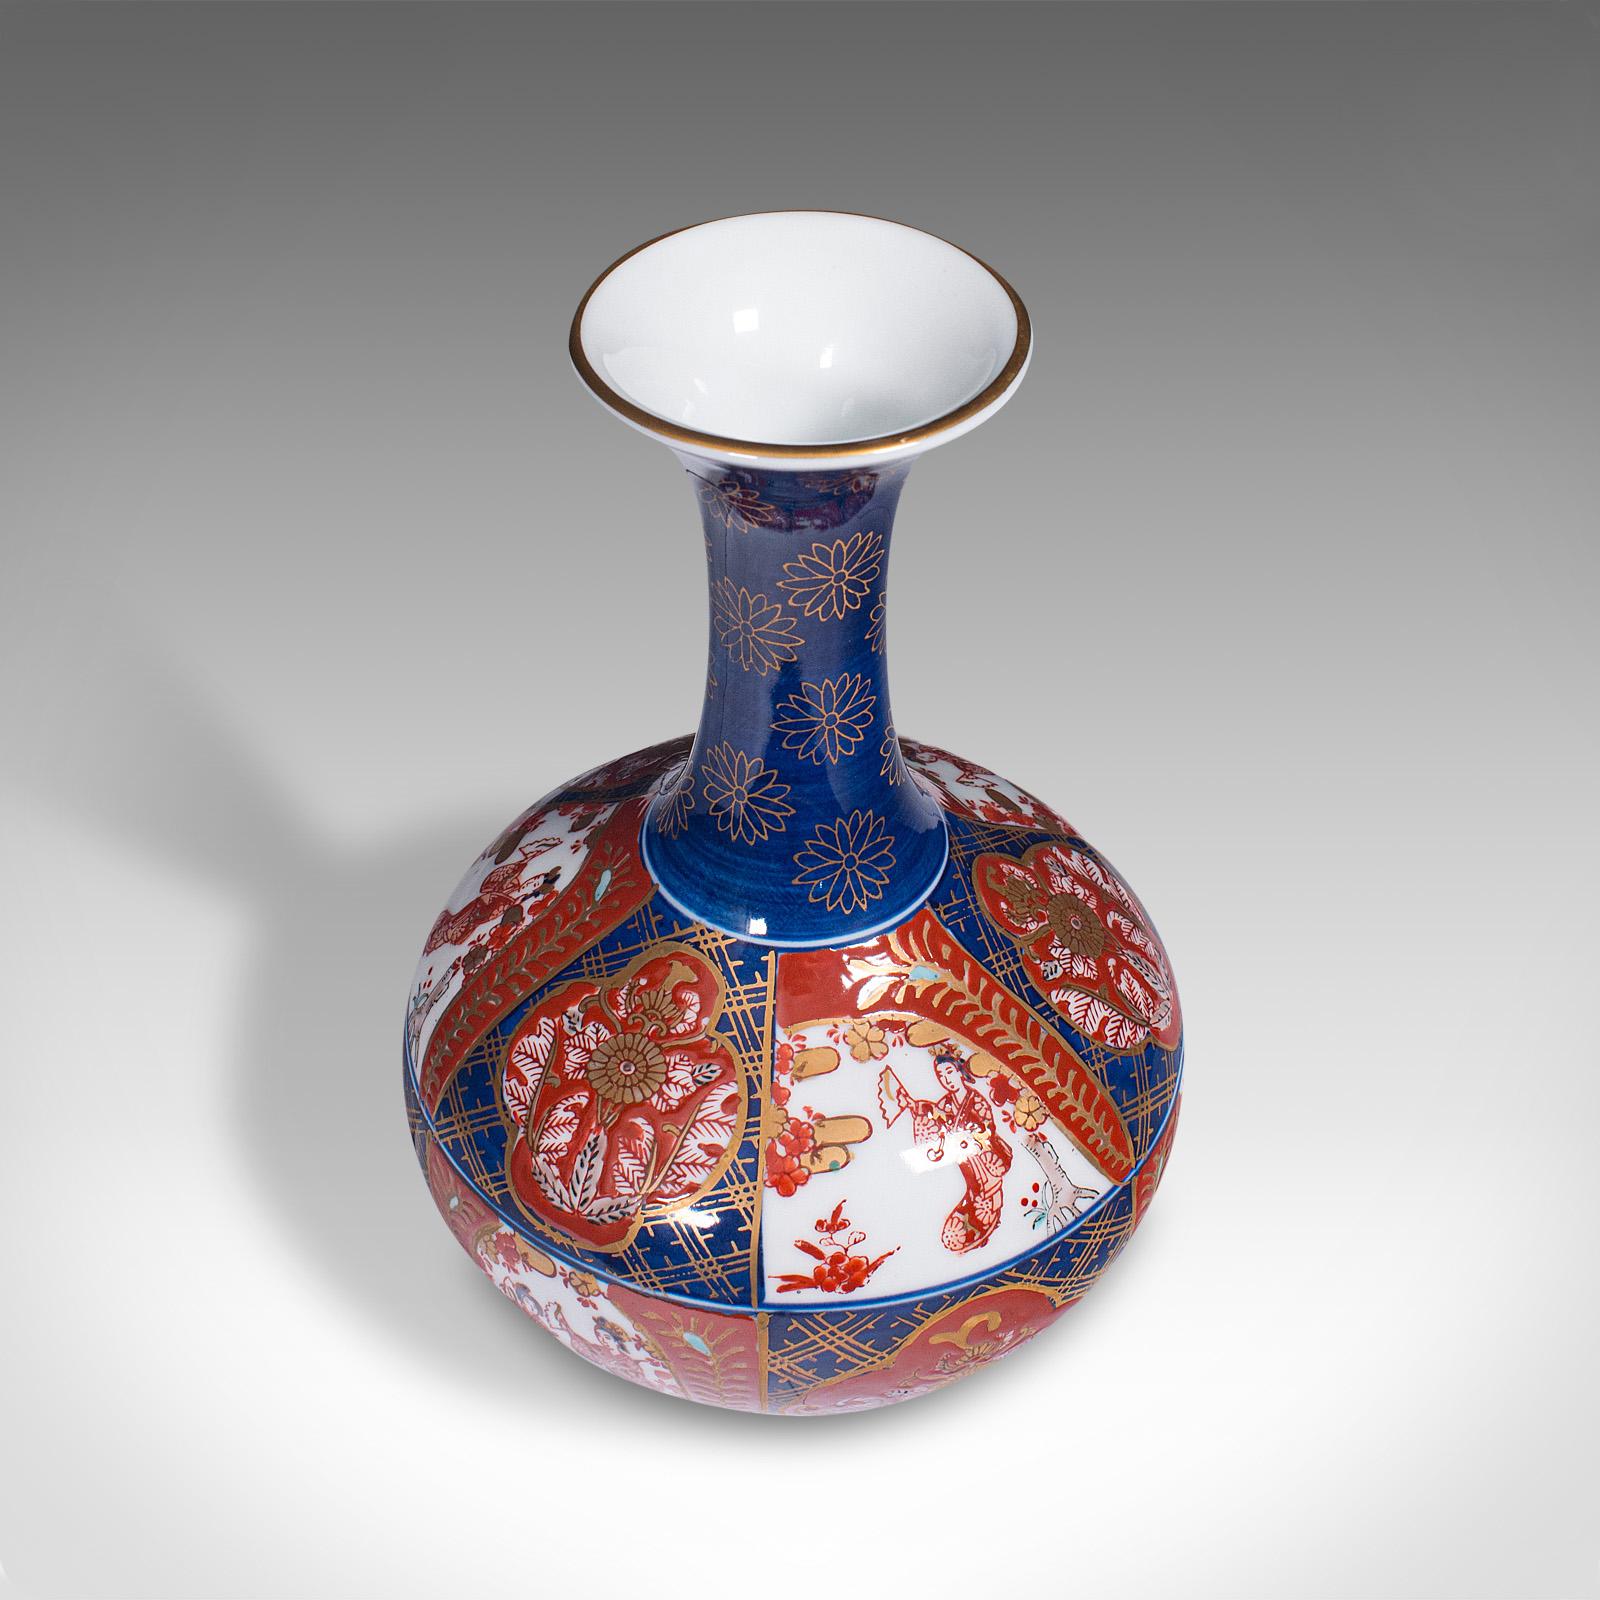 Vintage Imari Revival Flower Vase, Chinese, Ceramic, Decorative, Display Urn For Sale 2